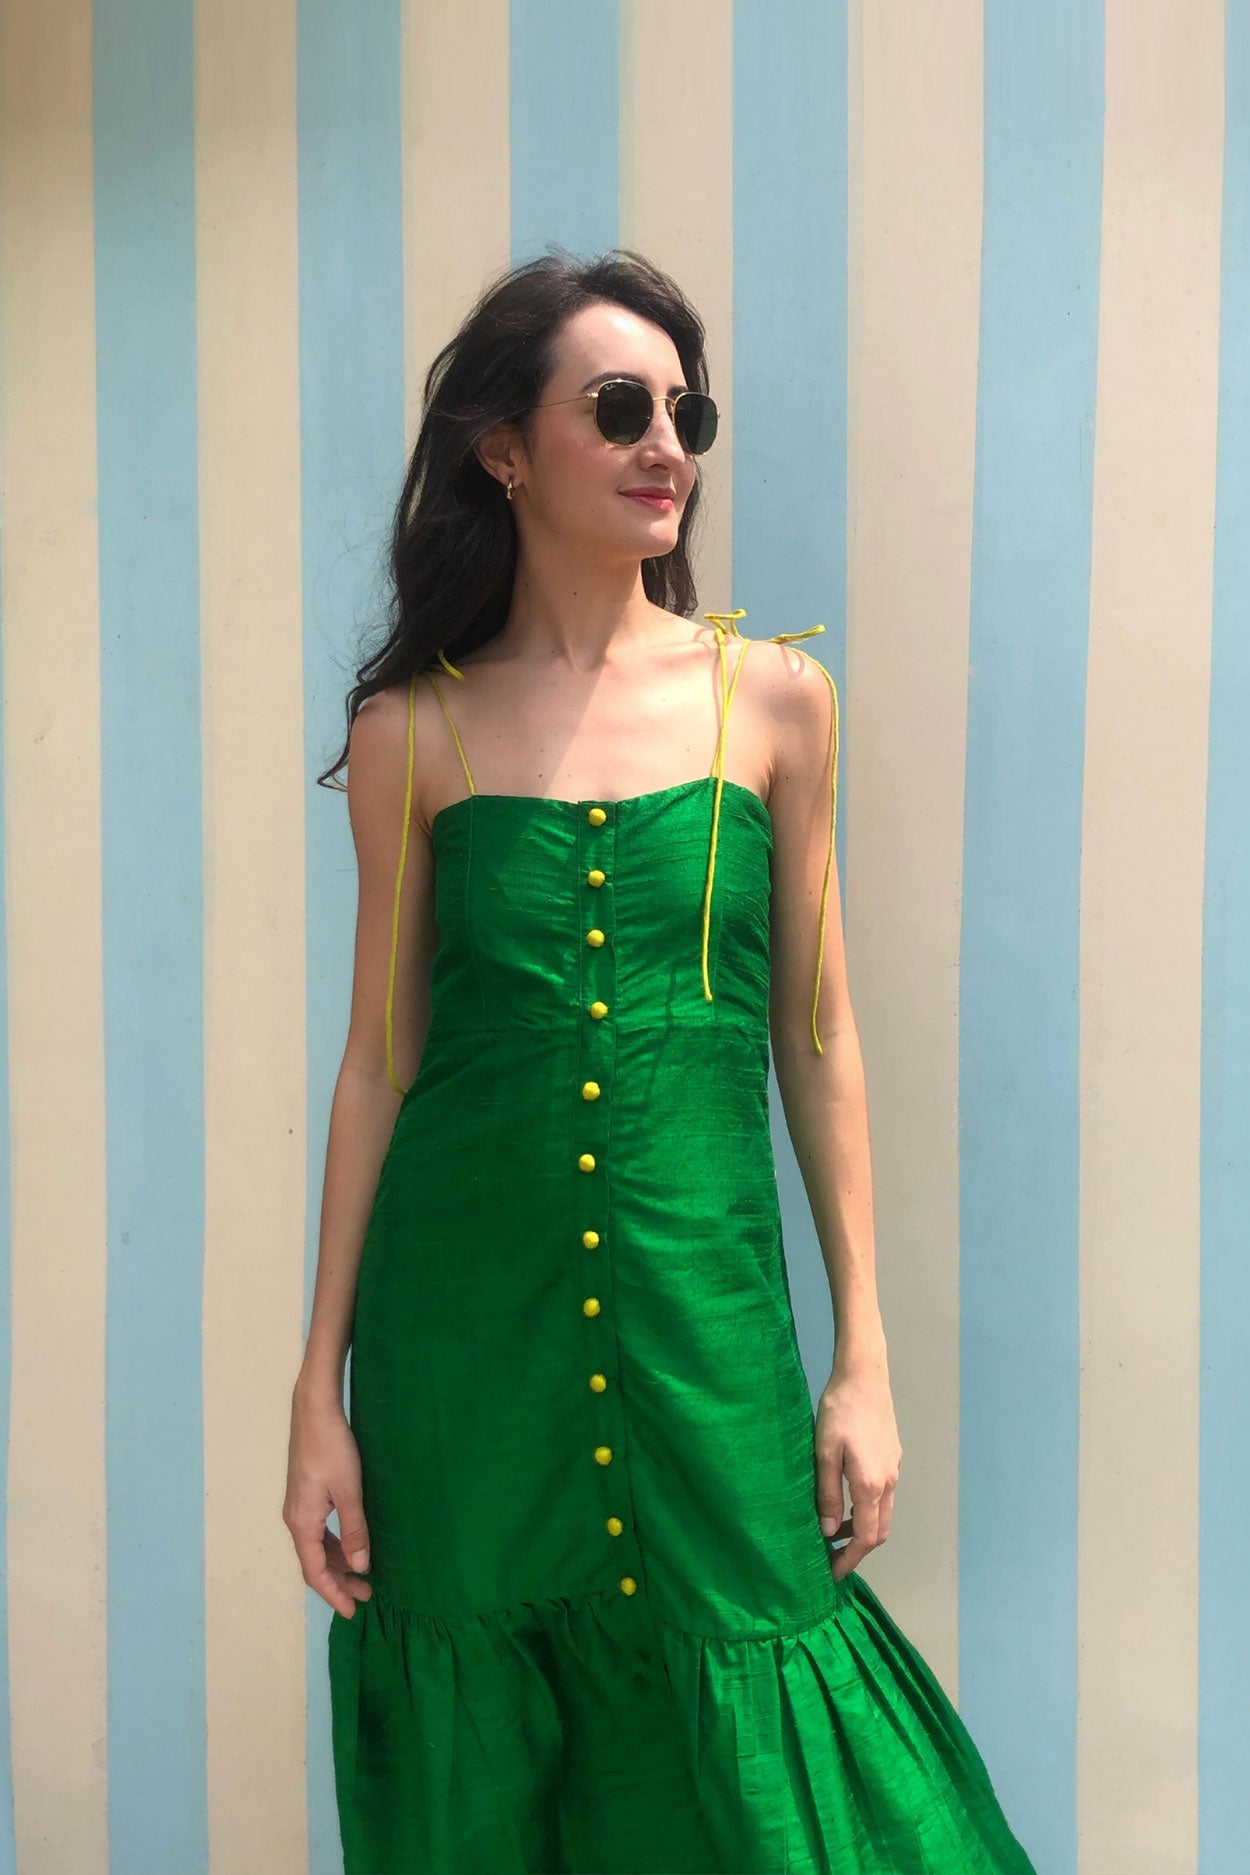 Green Marbella Silk Dress by Hess